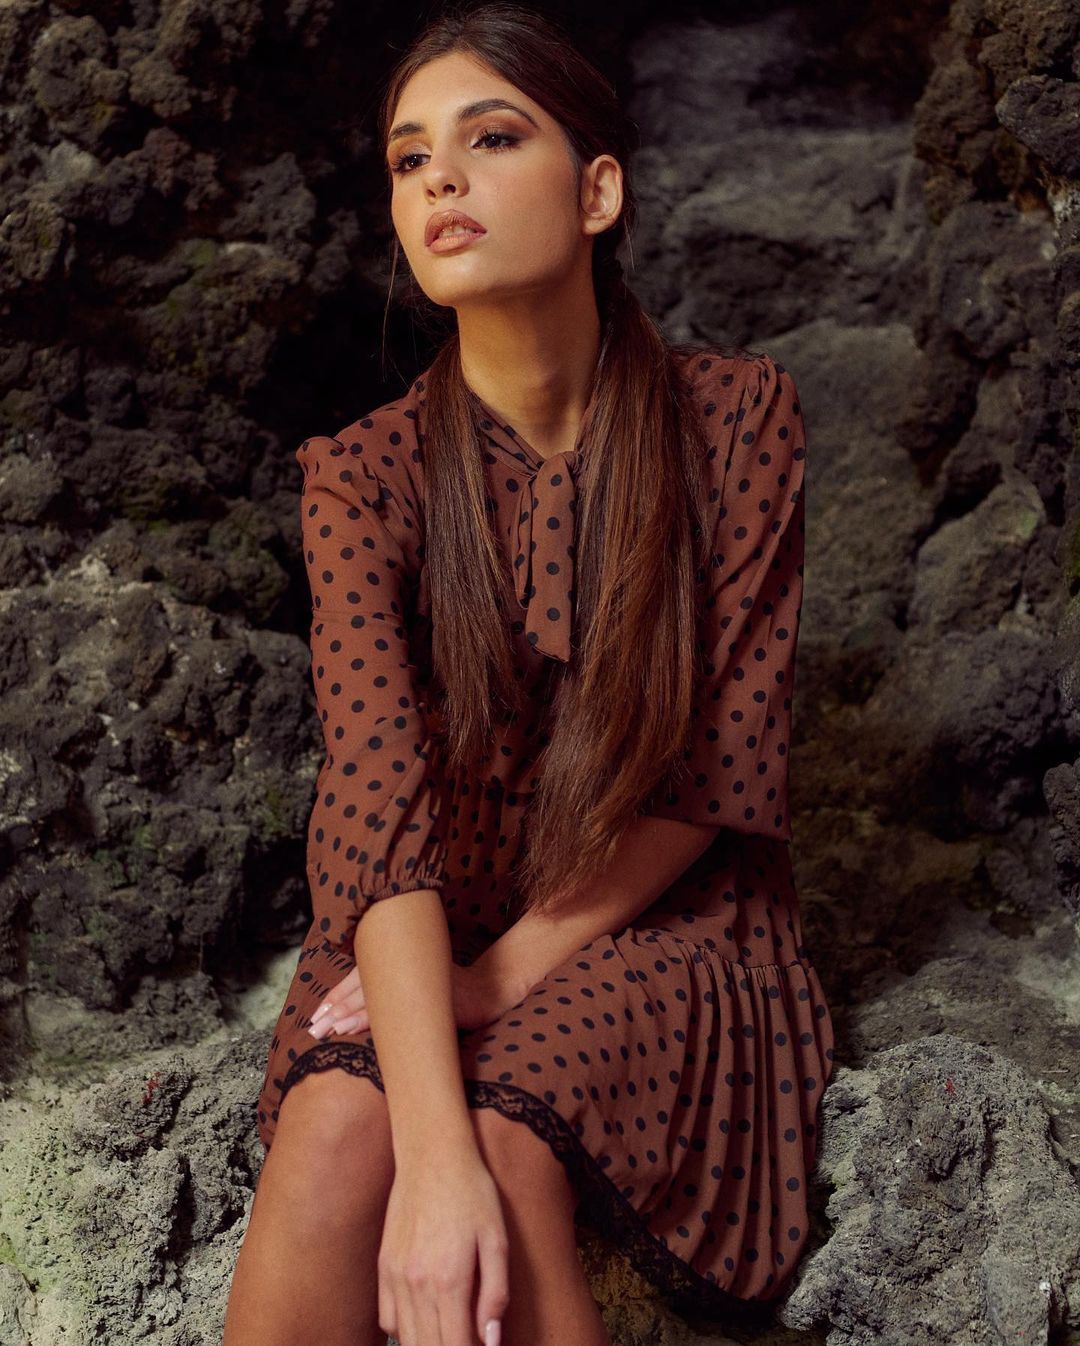 Italian model Valeria Sarnataro in Black Dotted Brown Dress During Photoshoot 11/19/2021 4